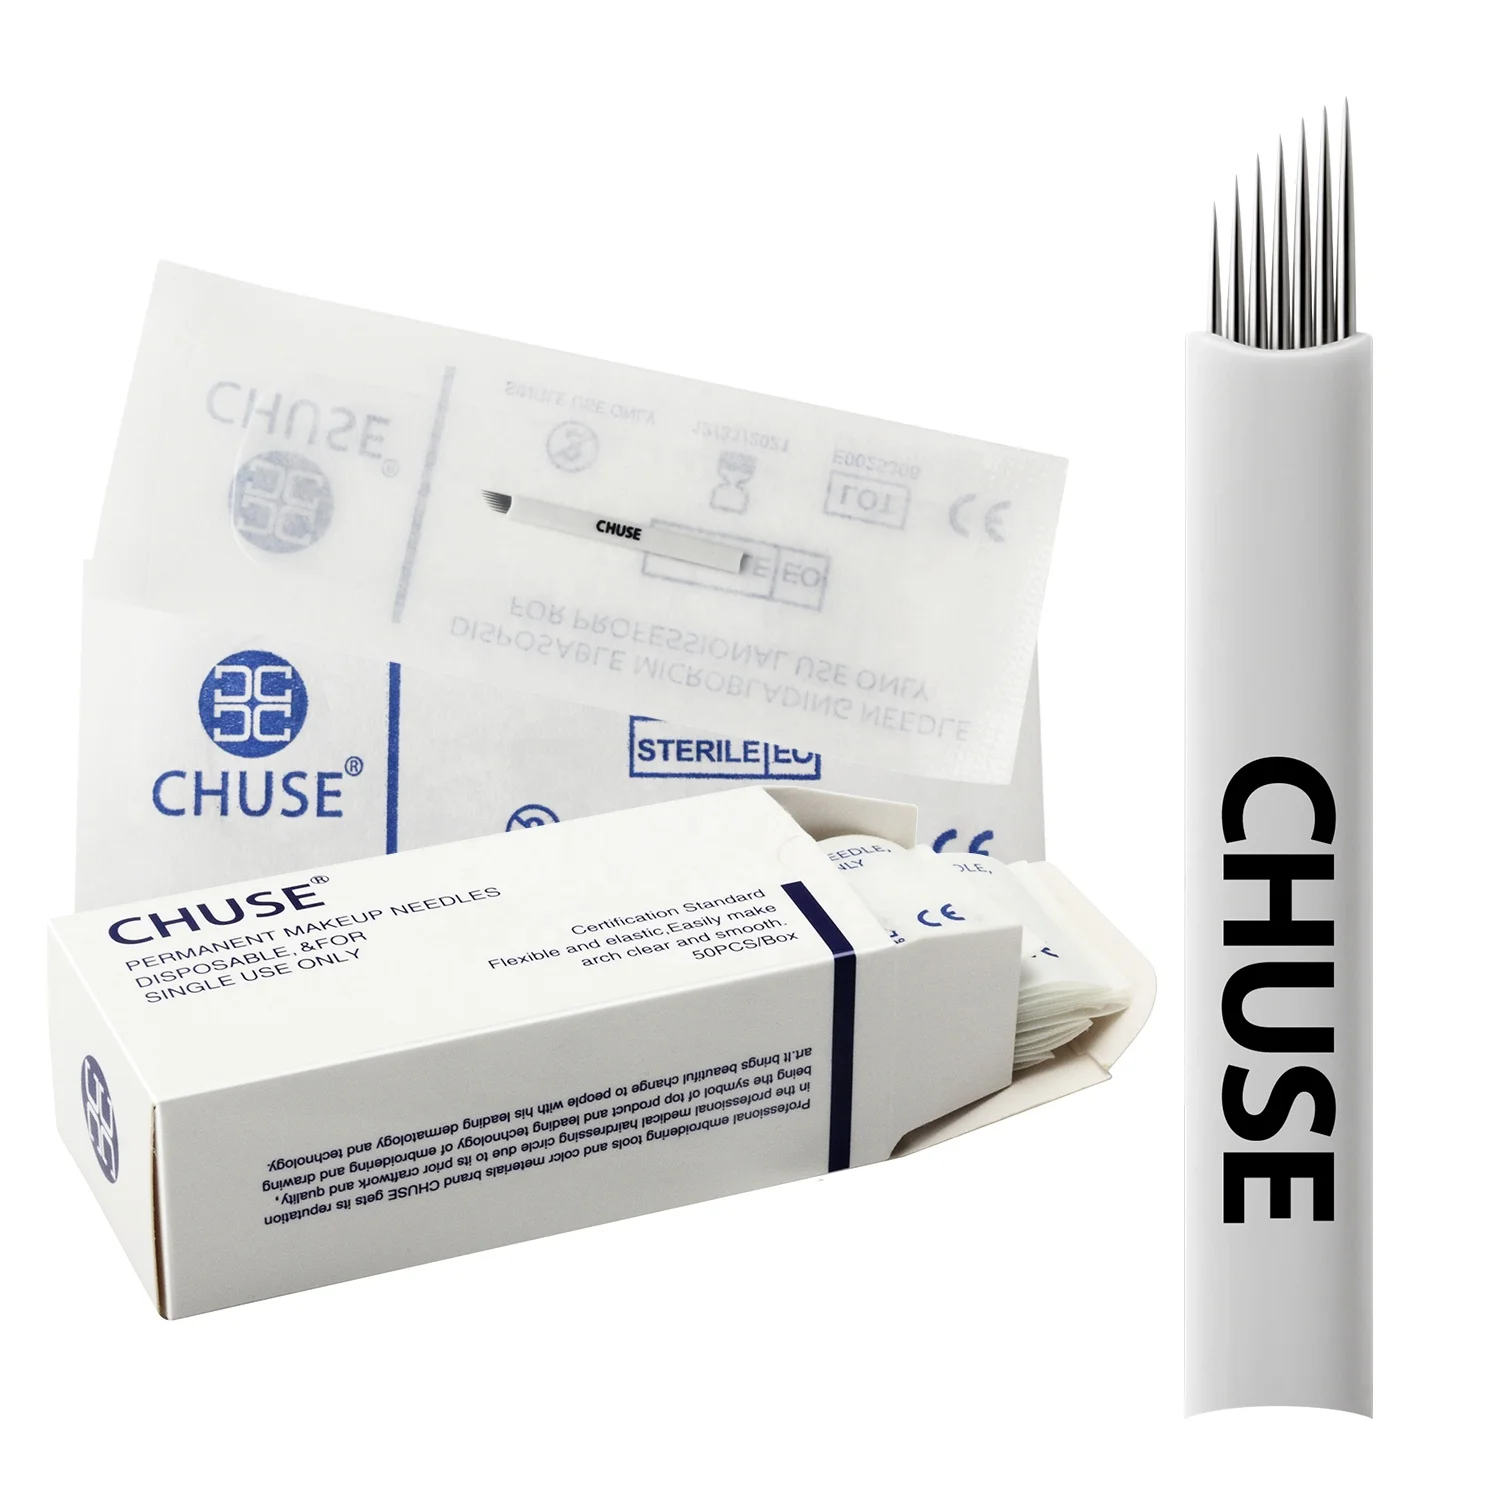 

CHUSE S7 Eyebrow Manual Tattoo Product Microblading Supplies Needles